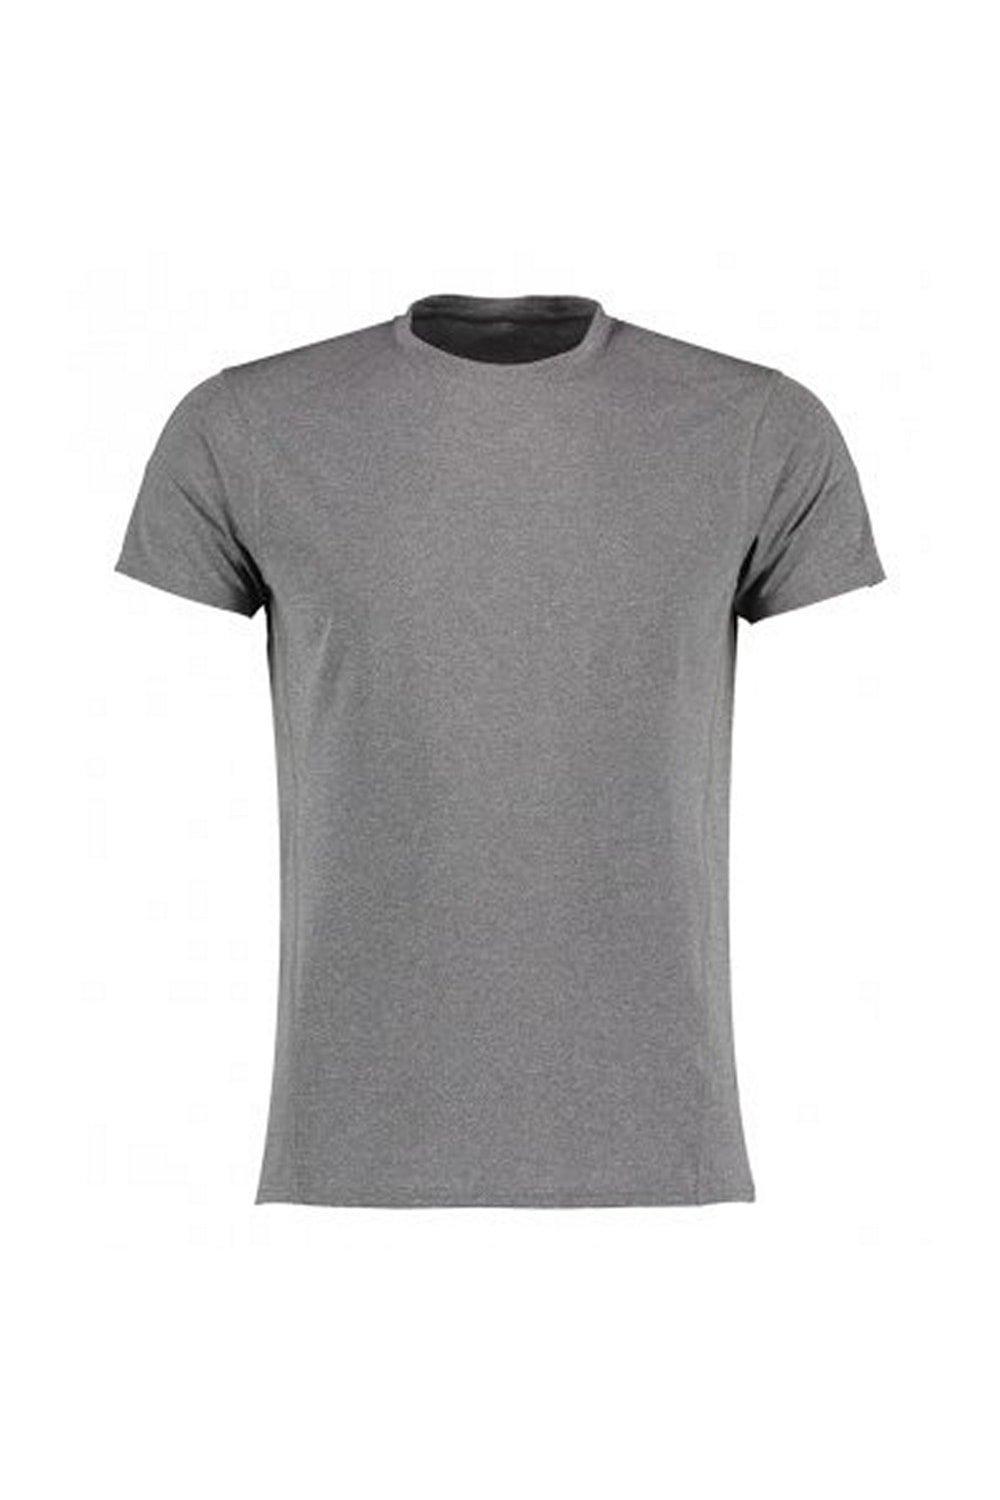 плоские швы размер l черный Компактная эластичная футболка Performance Gamegear, серый